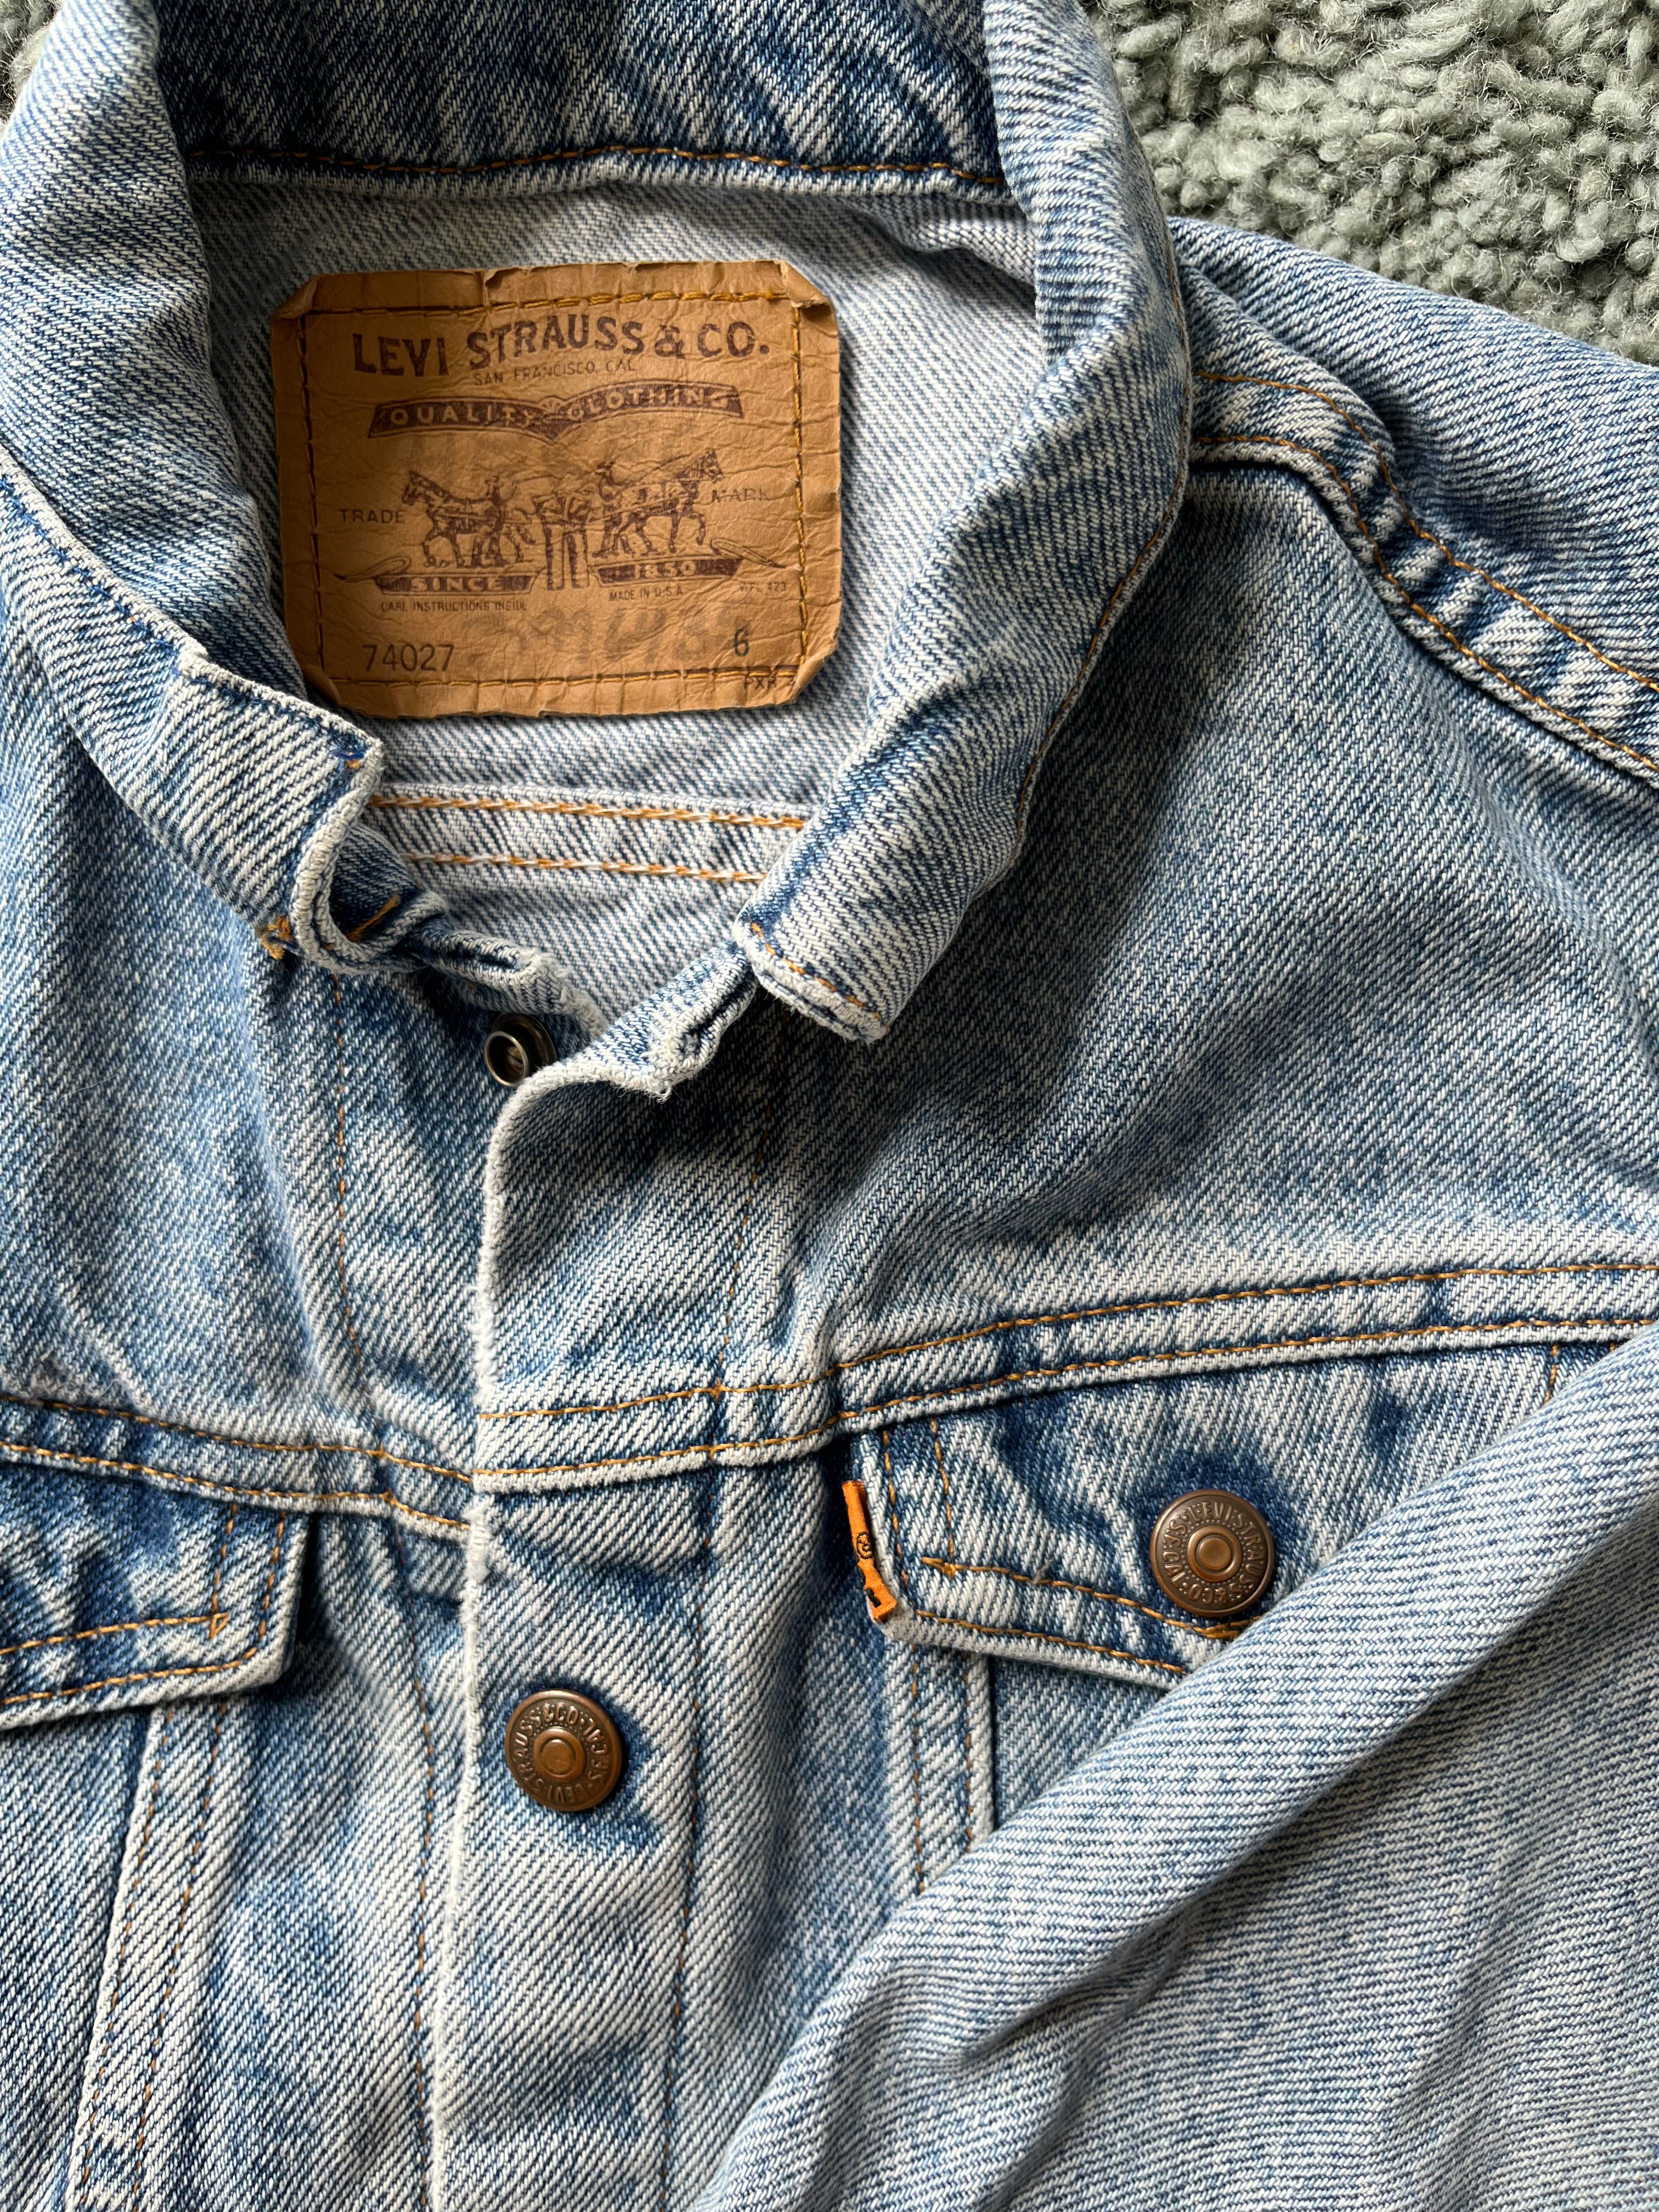 For Tessa - Vintage Levi's trucker jacket - size 6 years